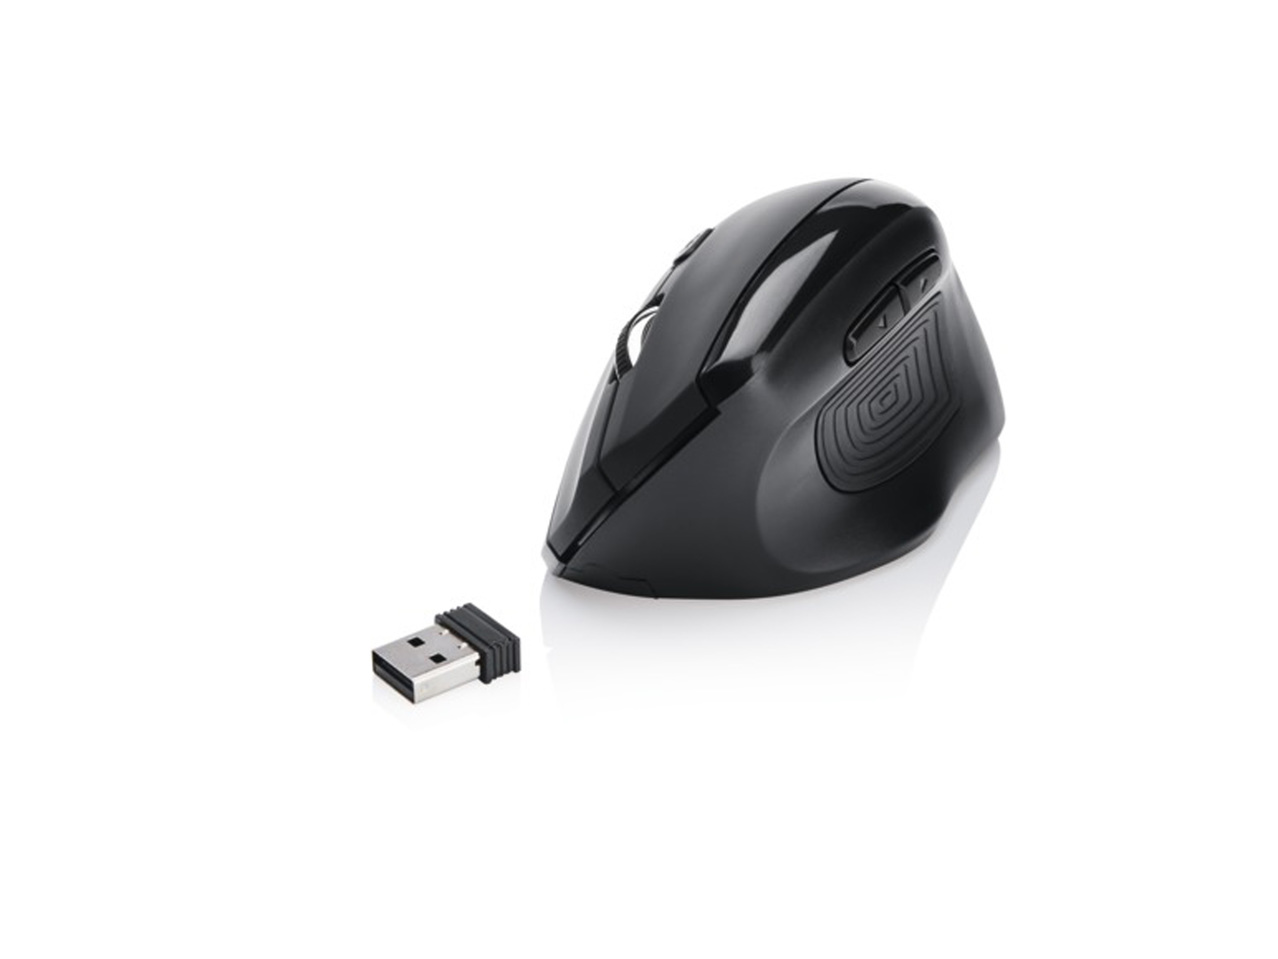 SILVERCREST Ergonomic Wireless Mouse